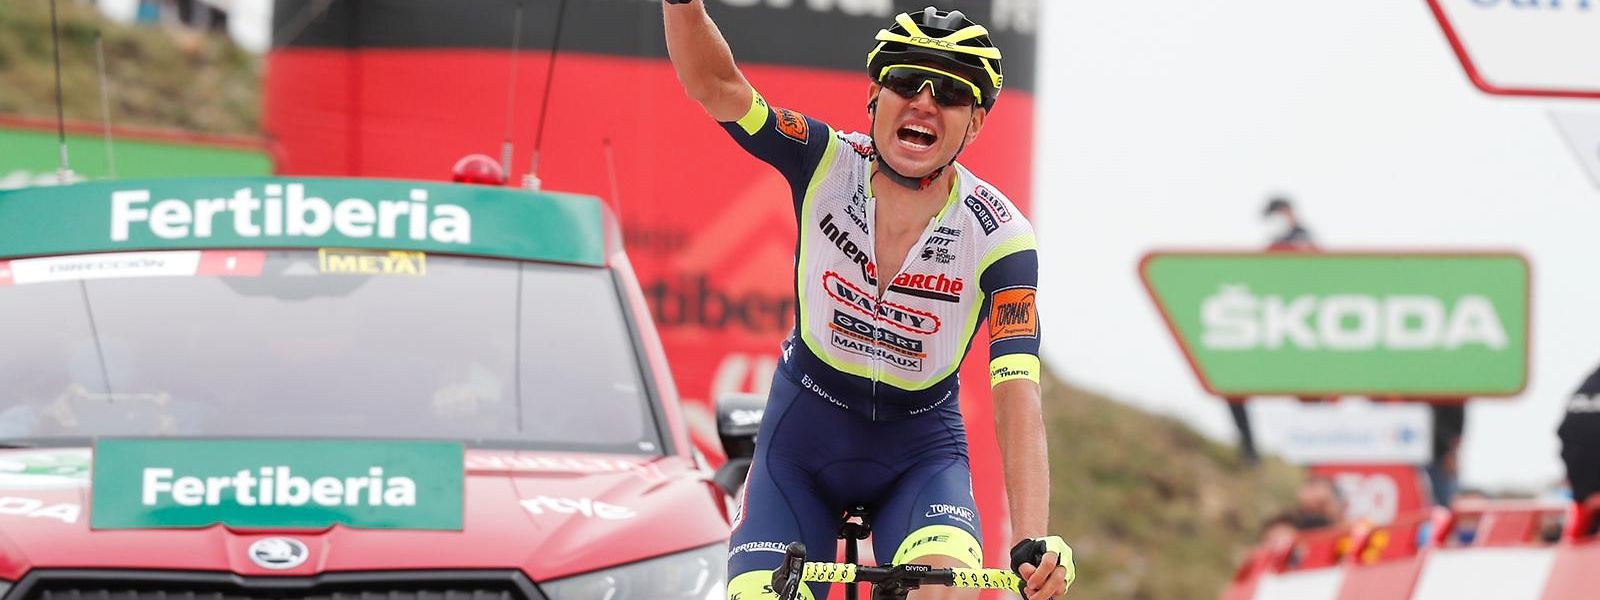 Rein Taaramäe feiert seinen zweiten Vuelta-Etappensieg.